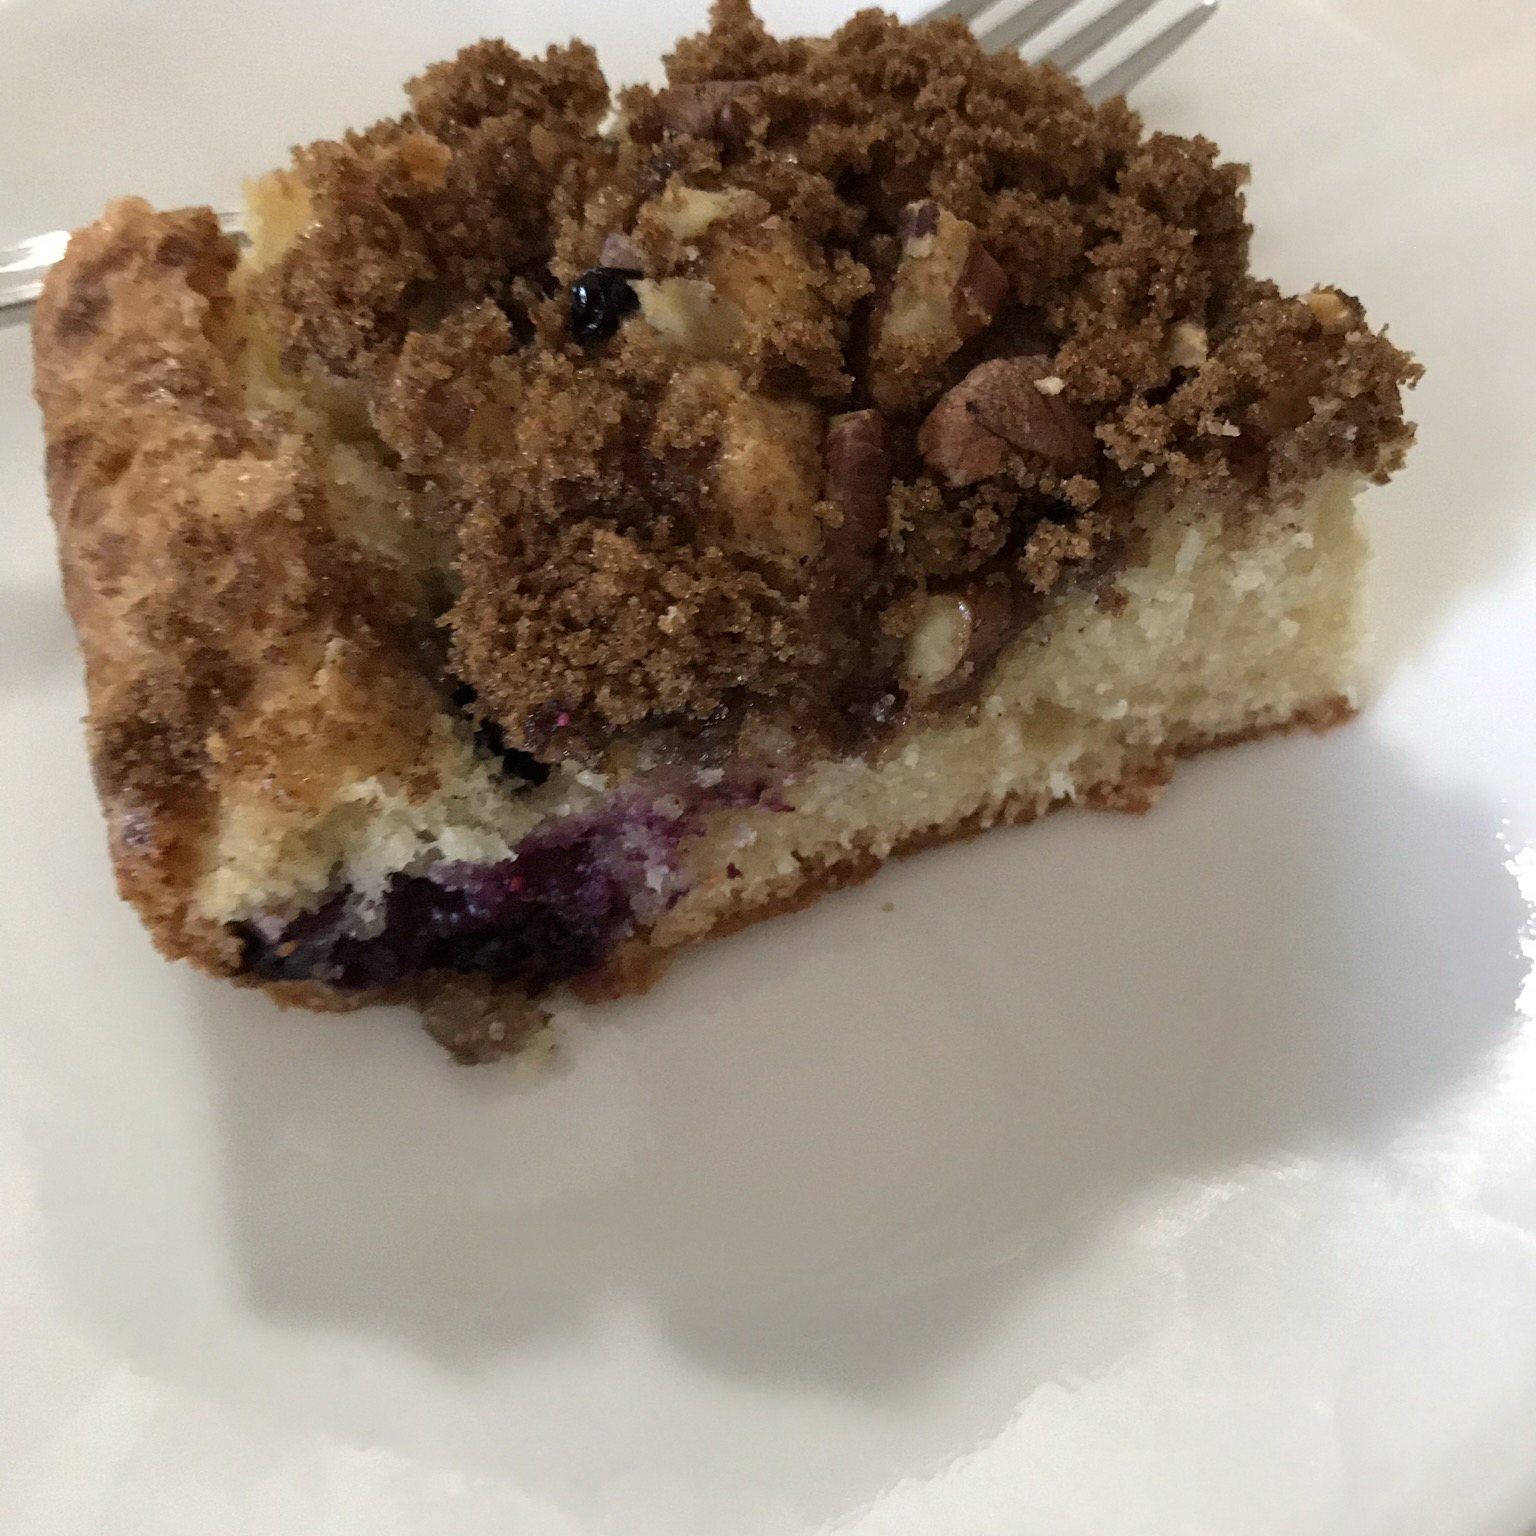 Blueberry Sour Cream Coffee Cake 